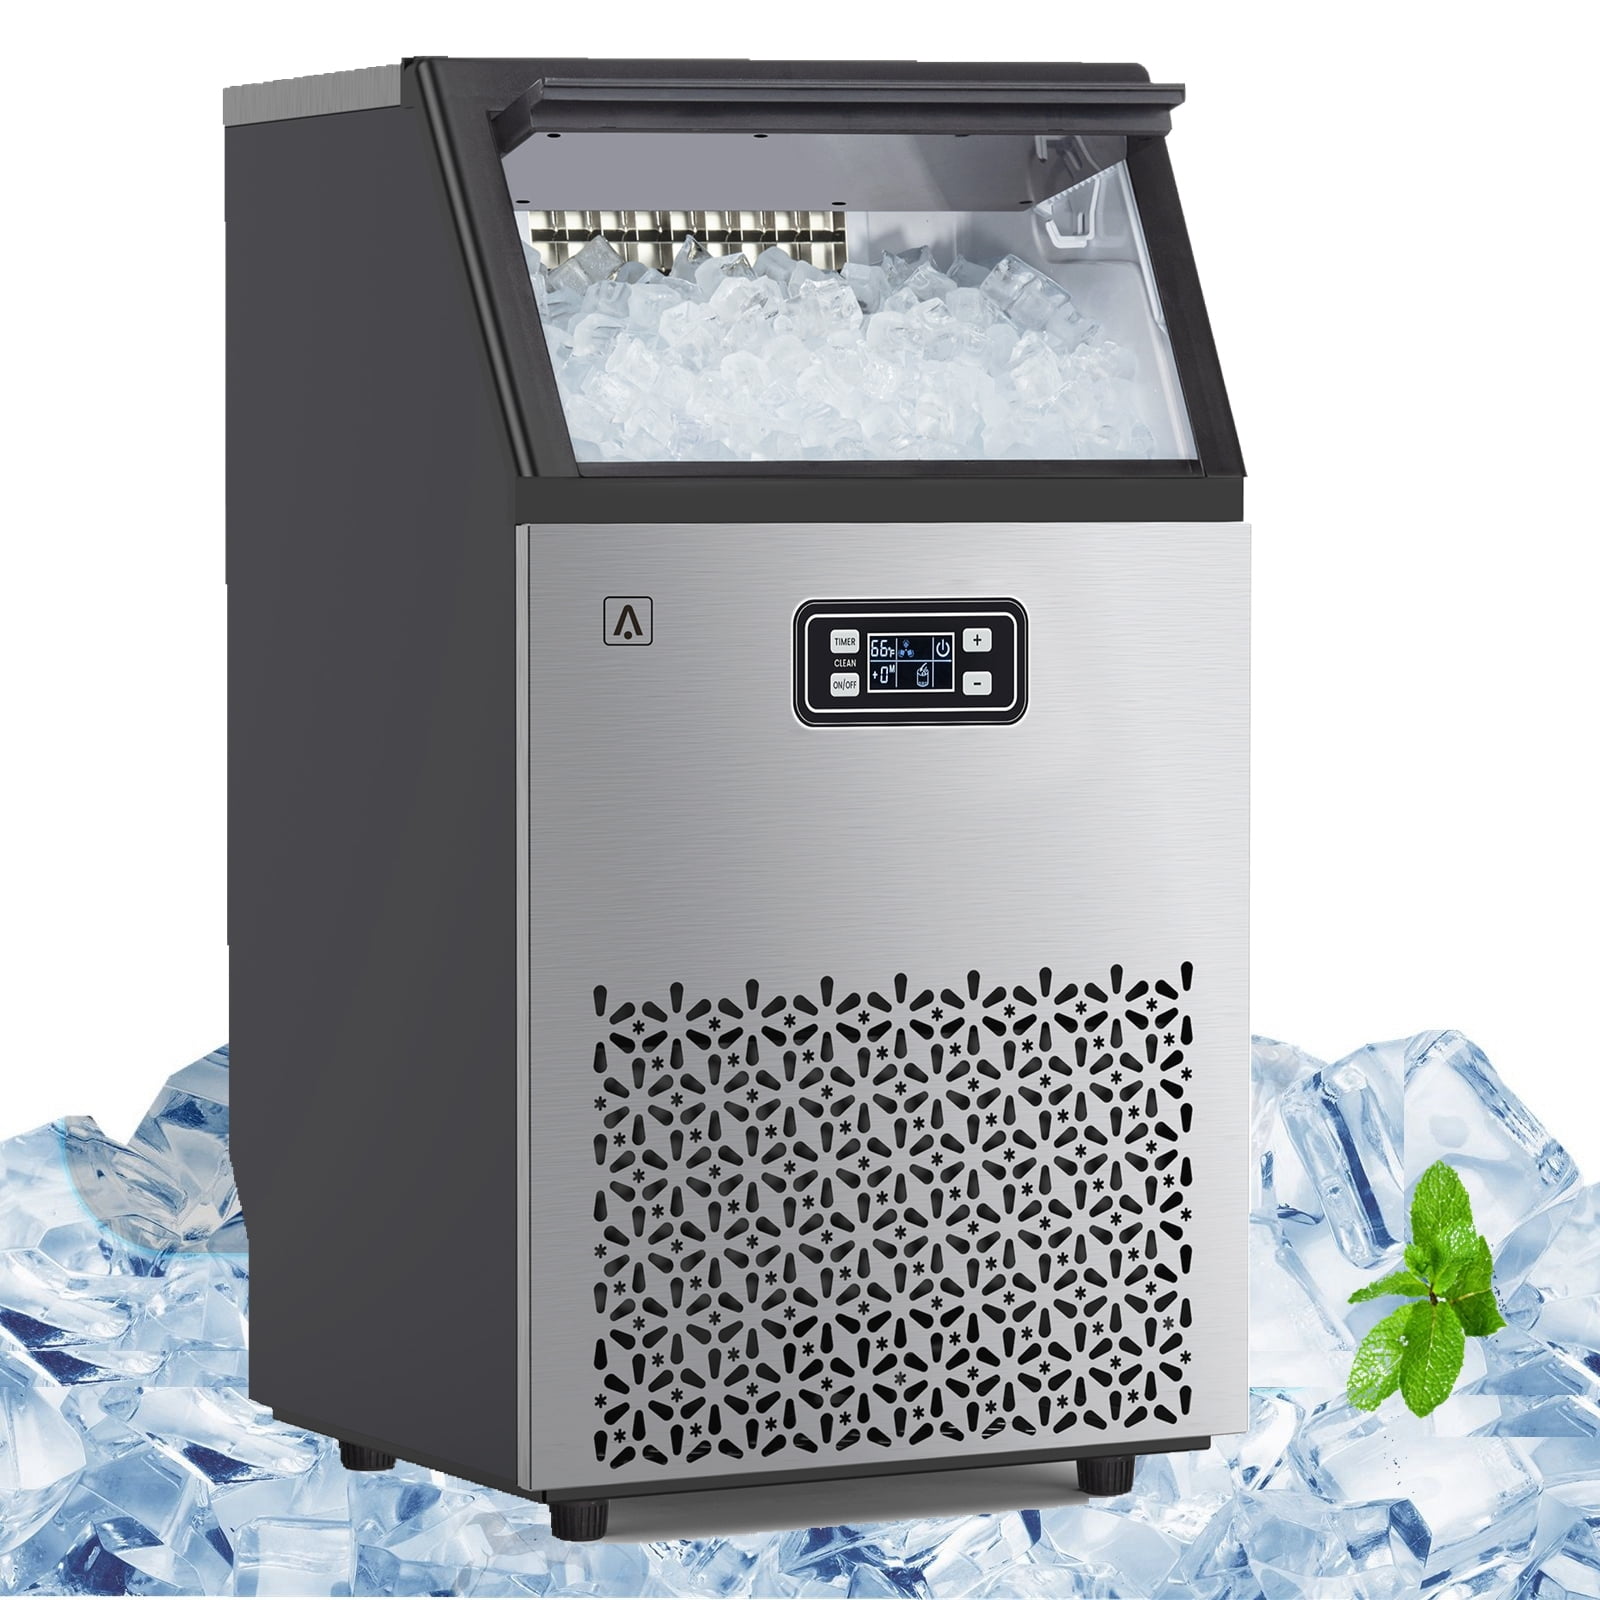 Emorefun Portable Nugget Ice Maker, 44Lbs/24H Compact Ice Machine